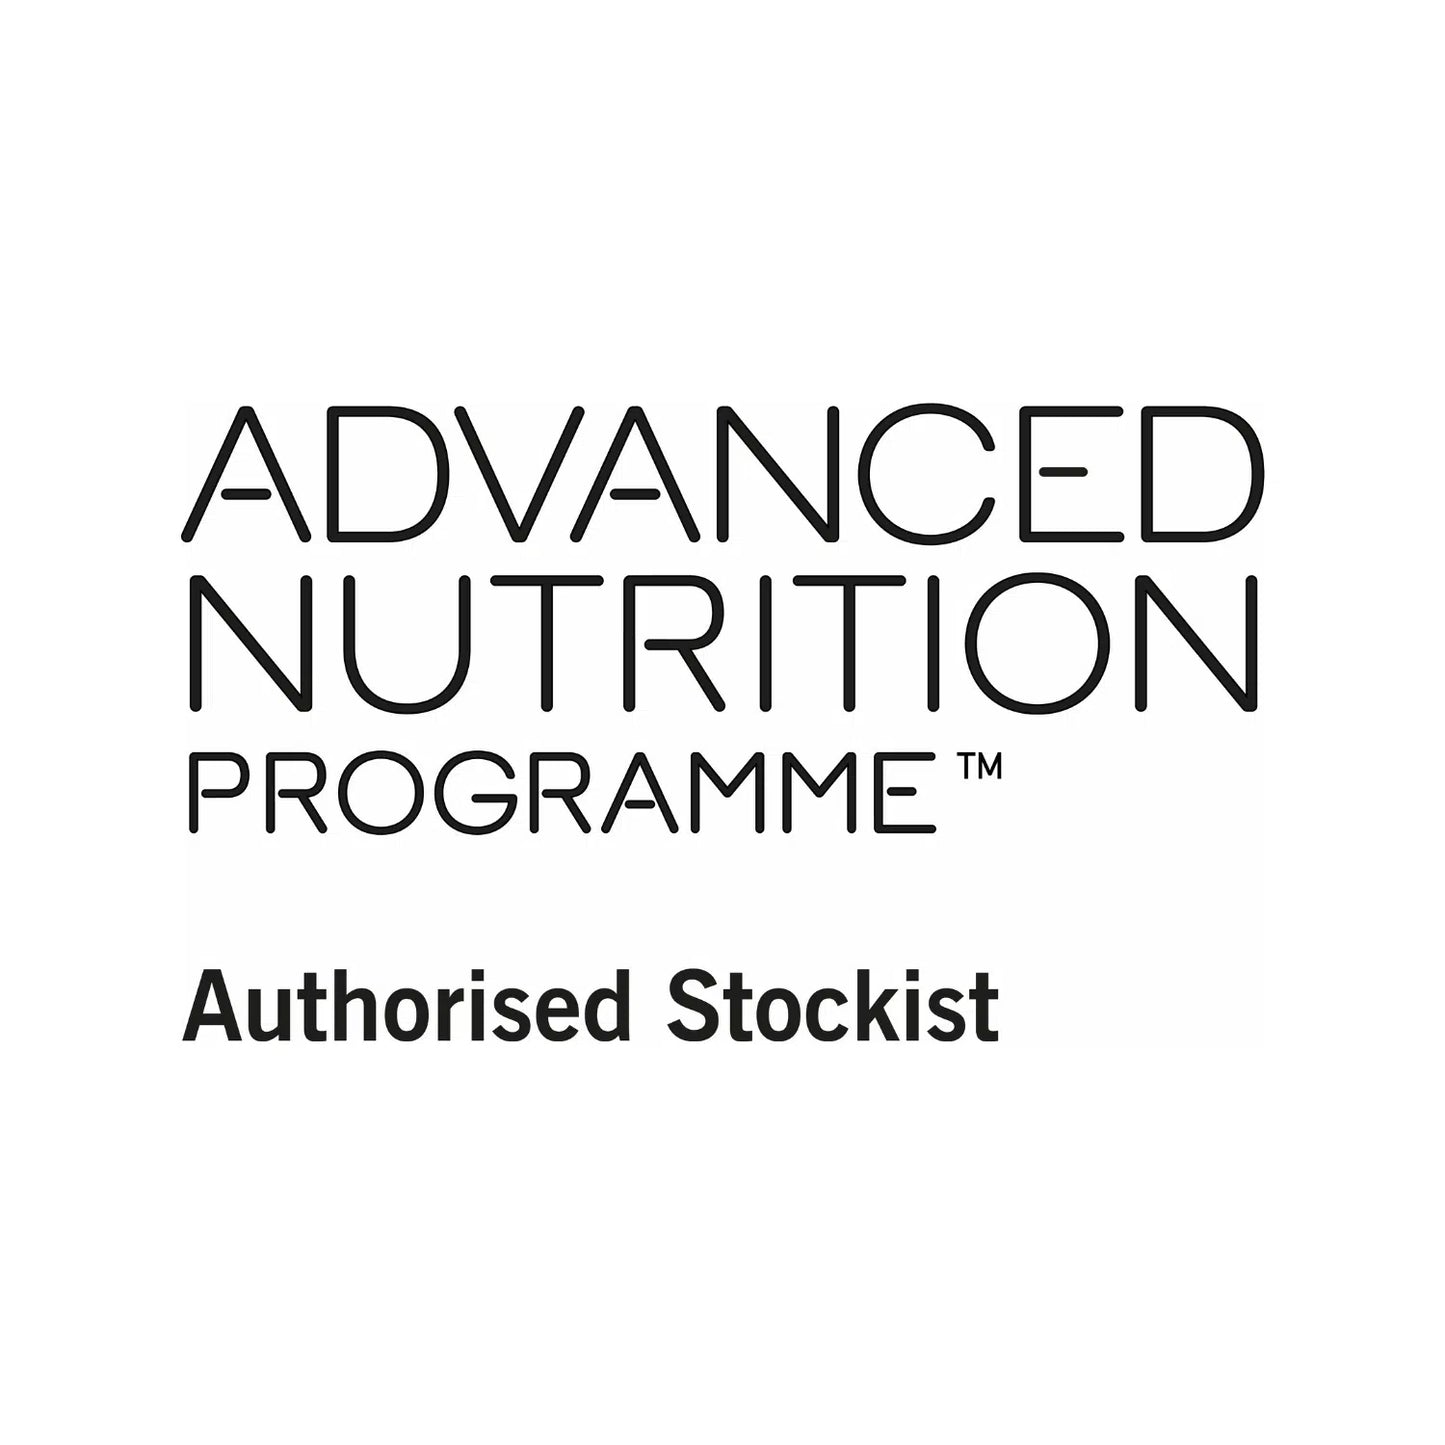 Advanced Nutrition Programme Skin Moisture Lock